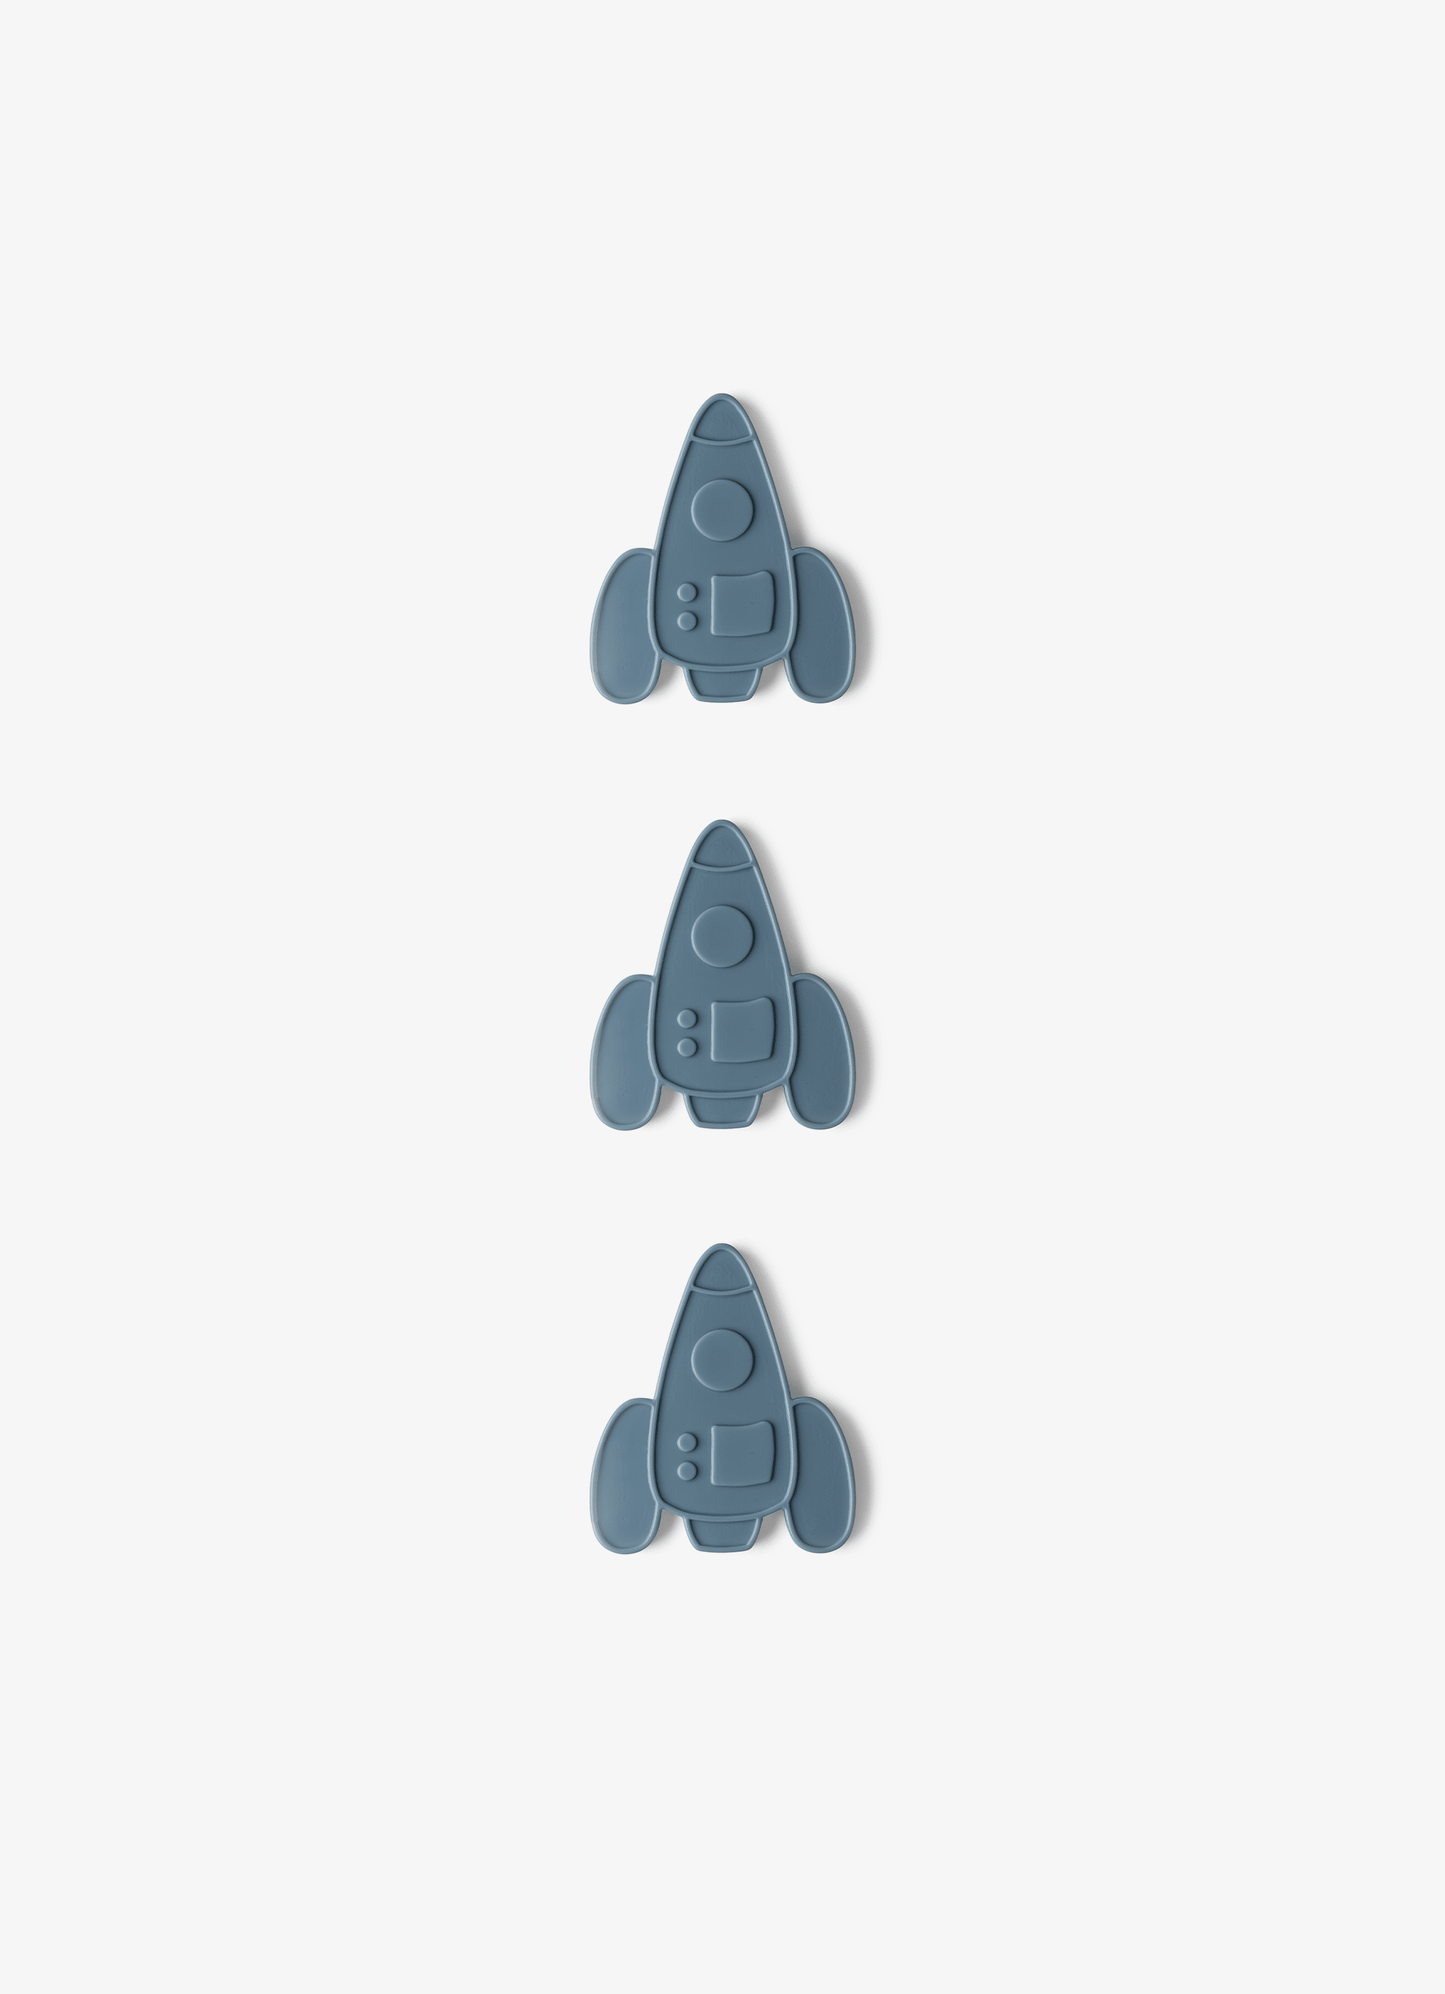 Ice packs - set of 3 - Spaceship Dusty Blue